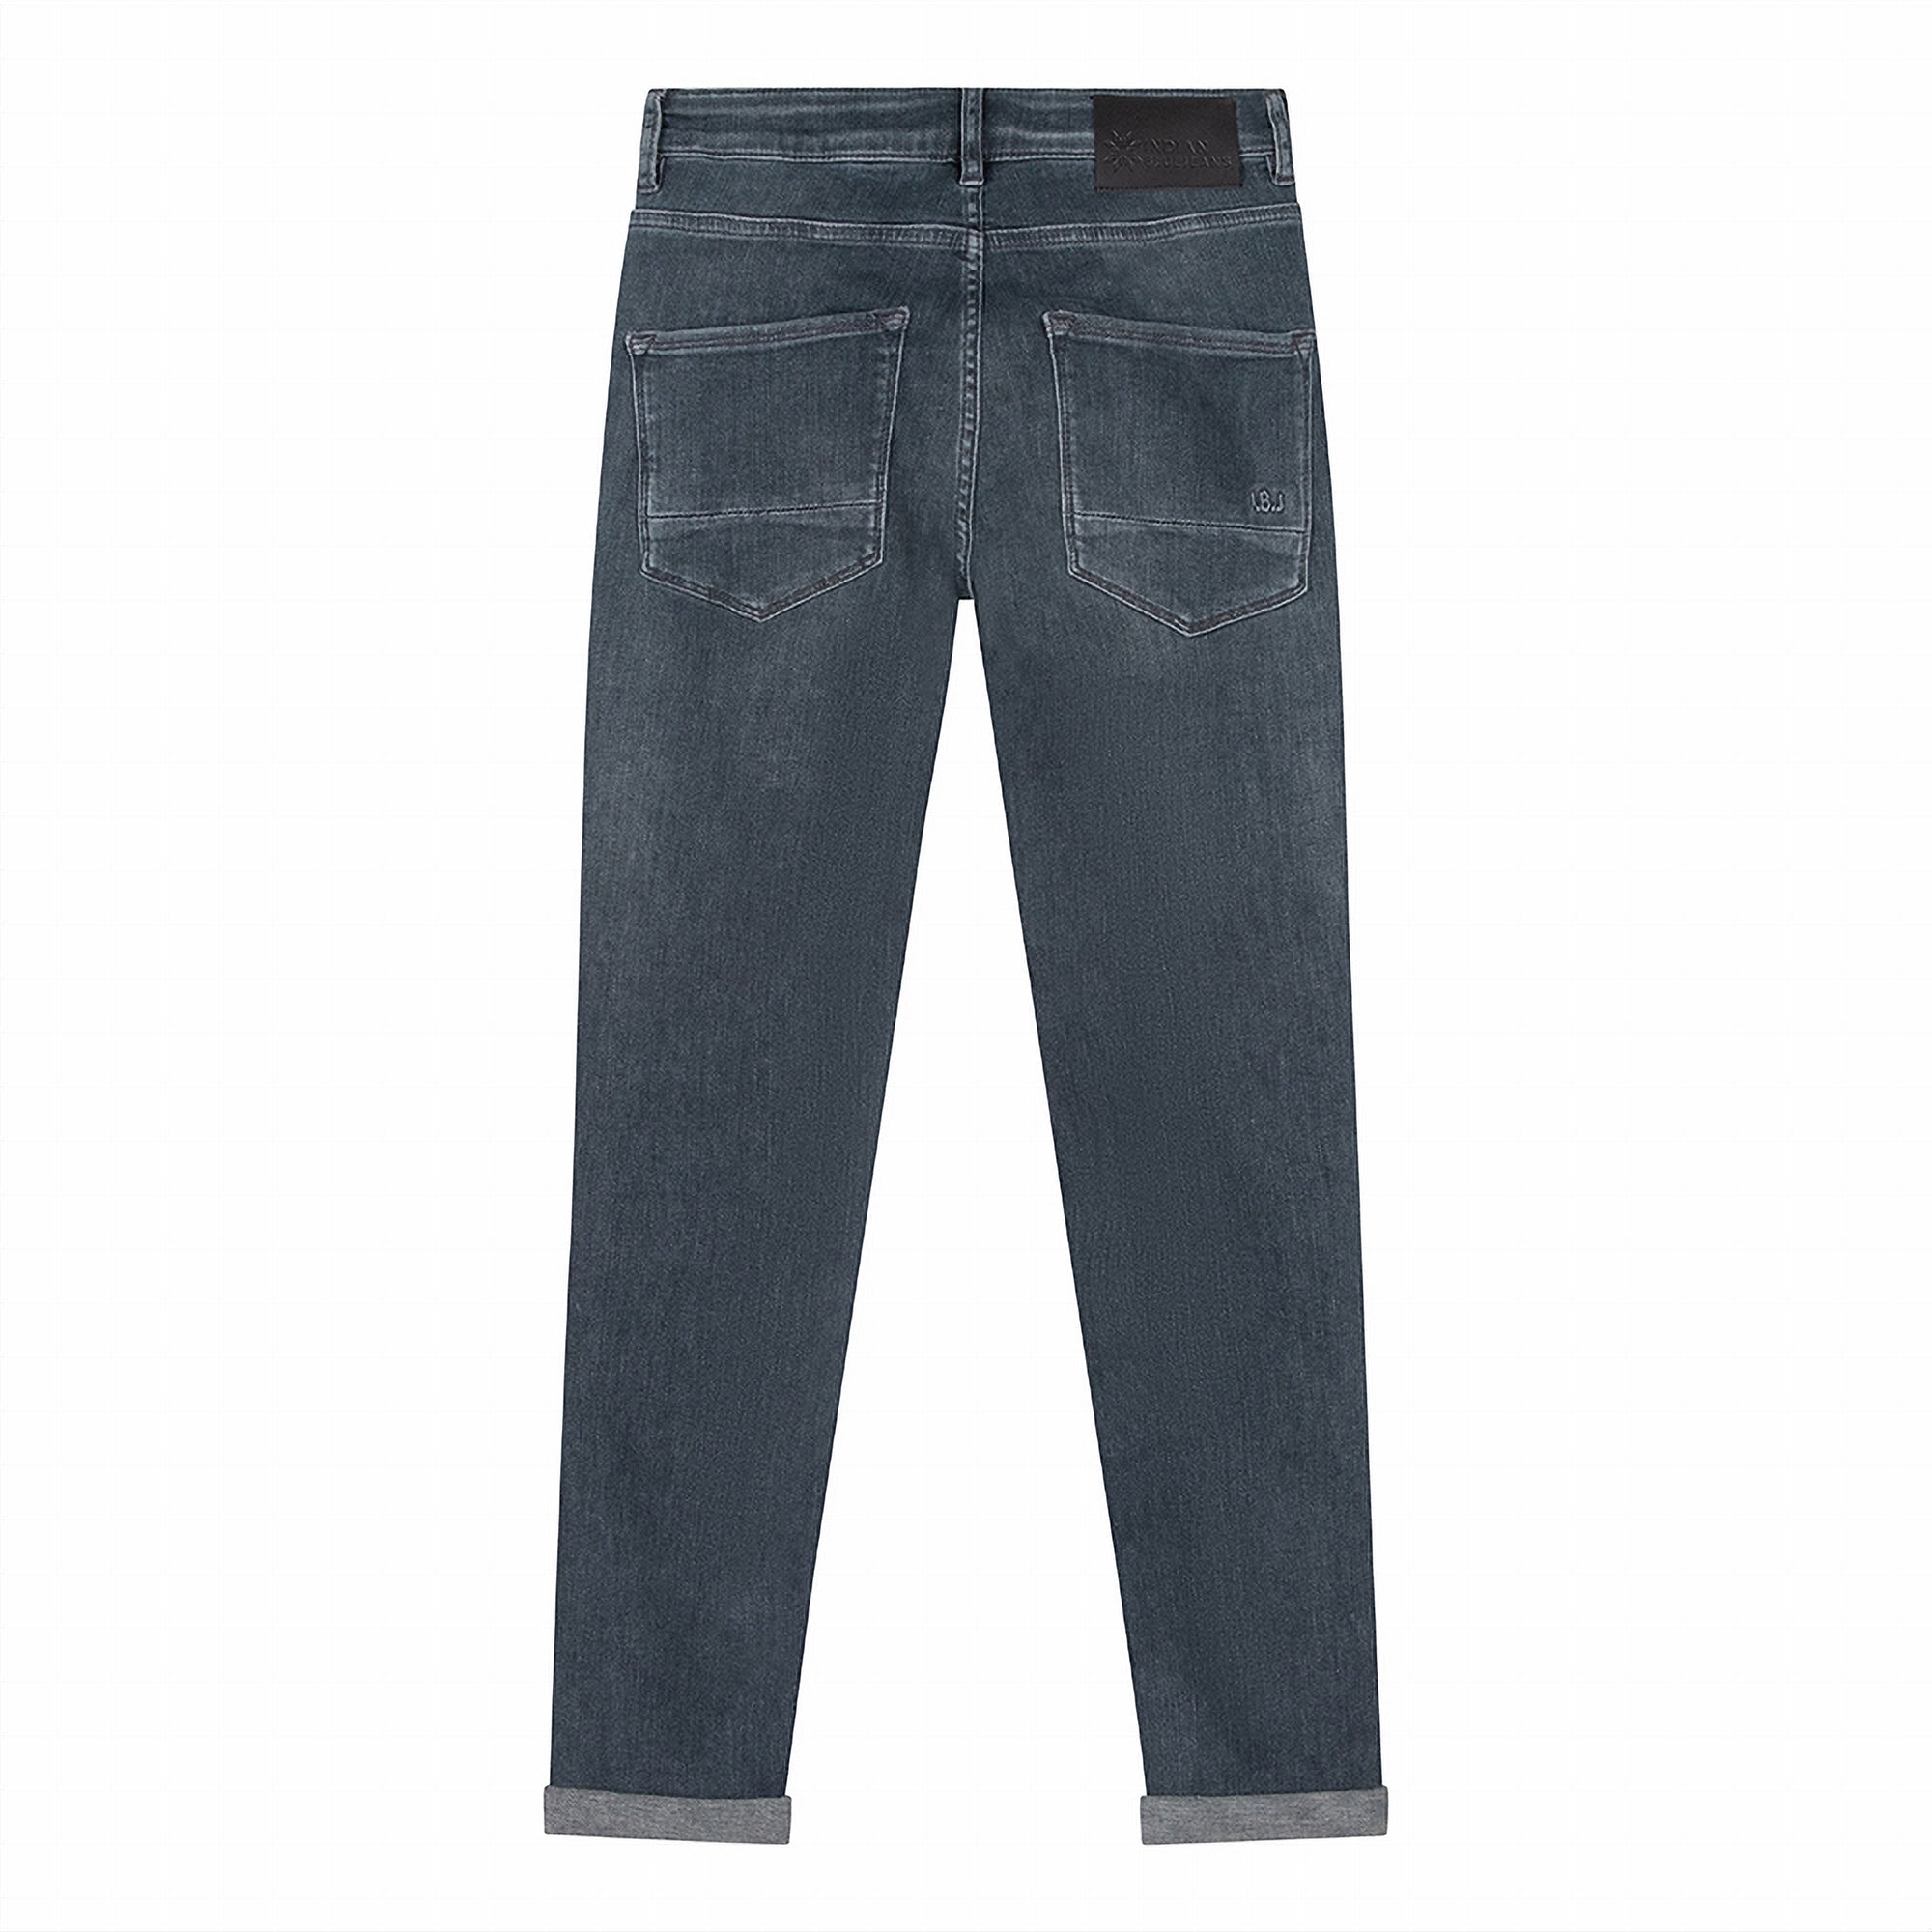 Jongens Jeans Blue Grey Jay Tapered Fit van Indian Blue Jeans in de kleur Dark Blue Grey Denim in maat 176.